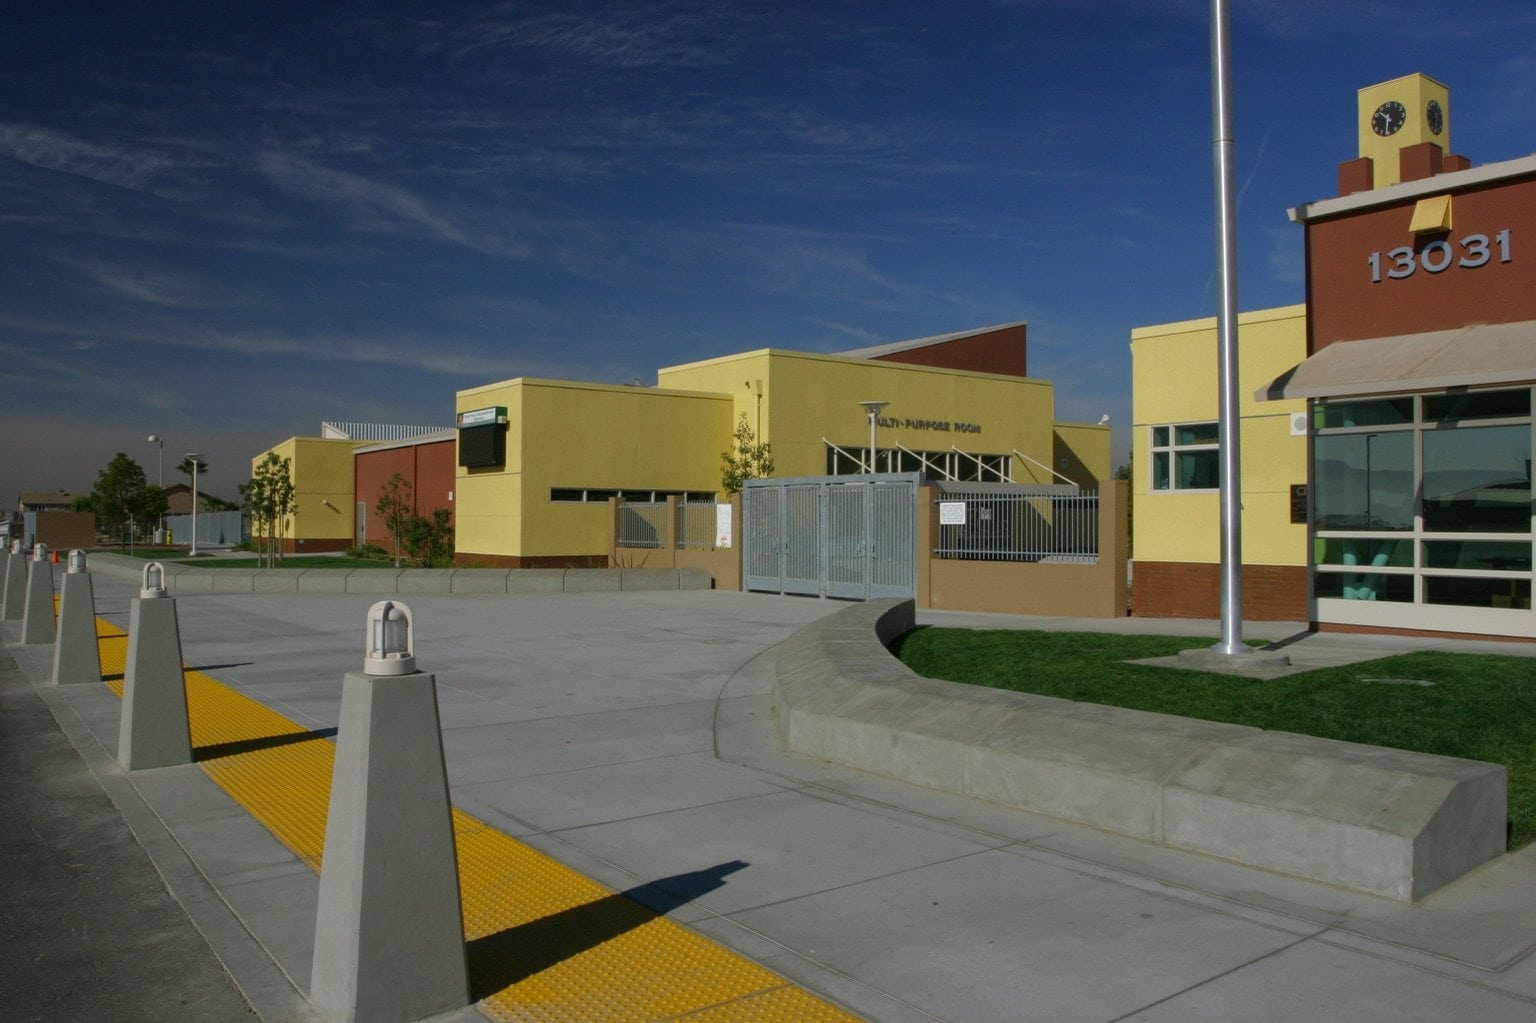 corona norco unified school district